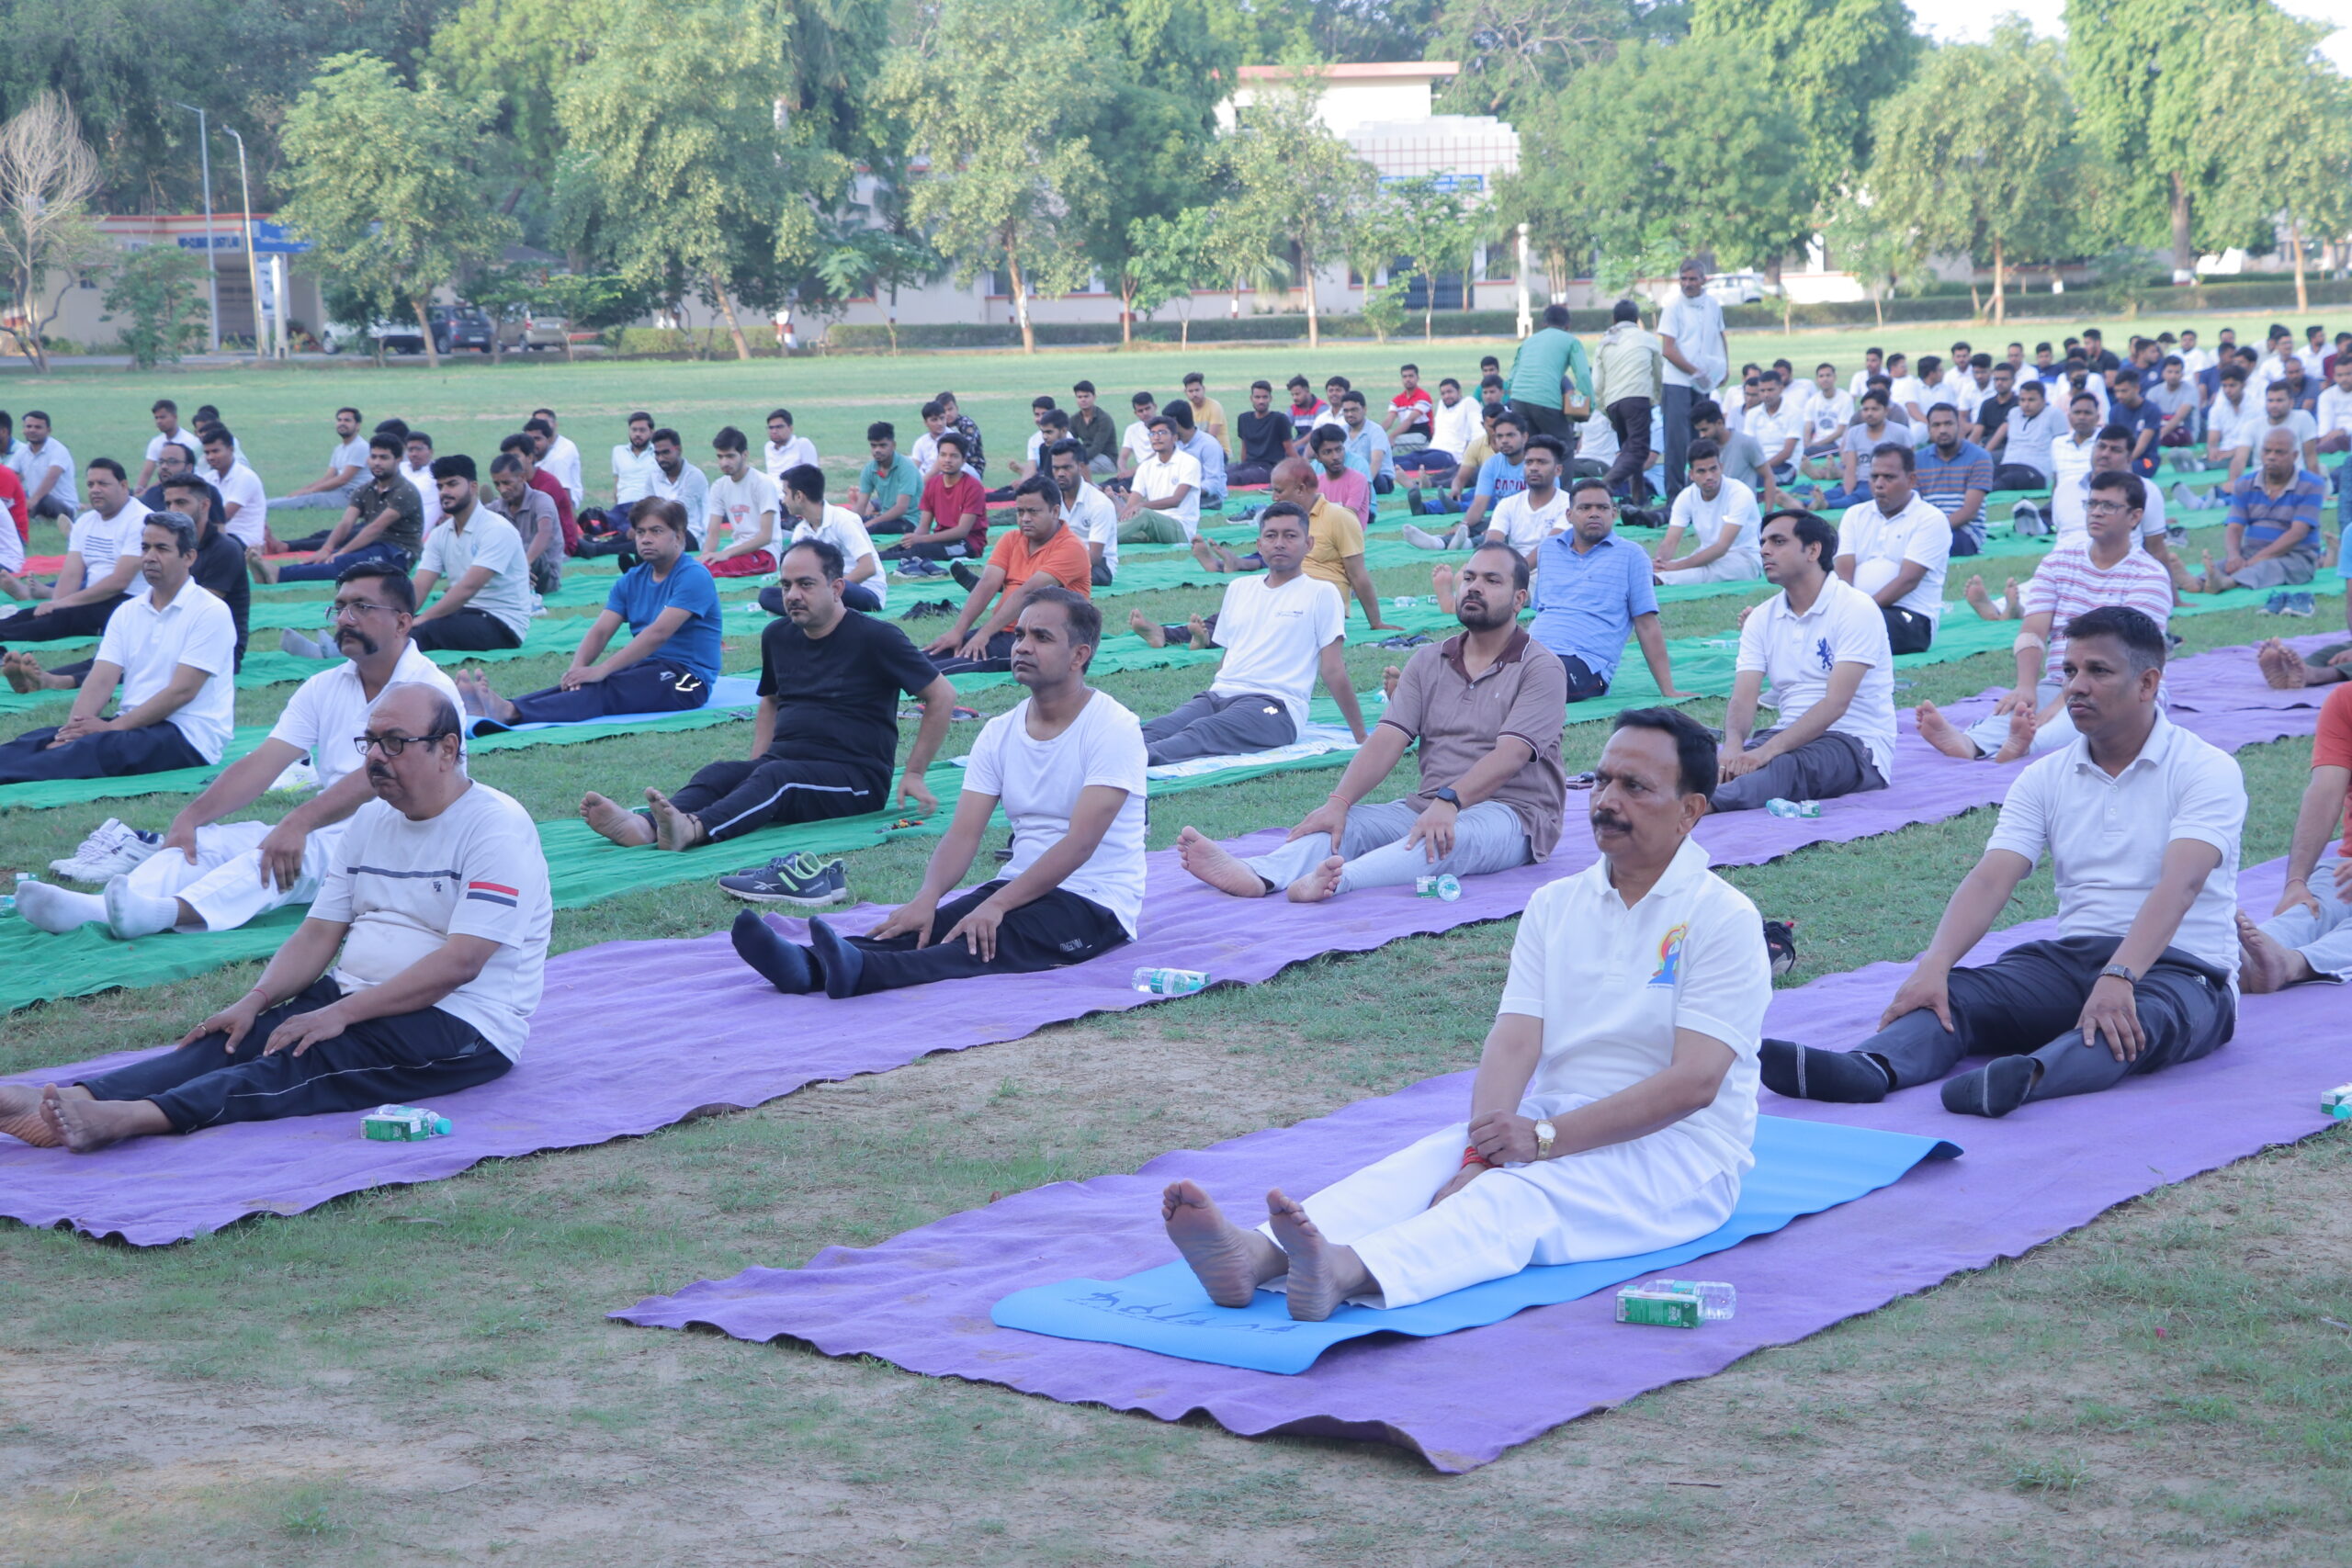 Celebration of 8th International Yoga Day at DUVASU, Mathura